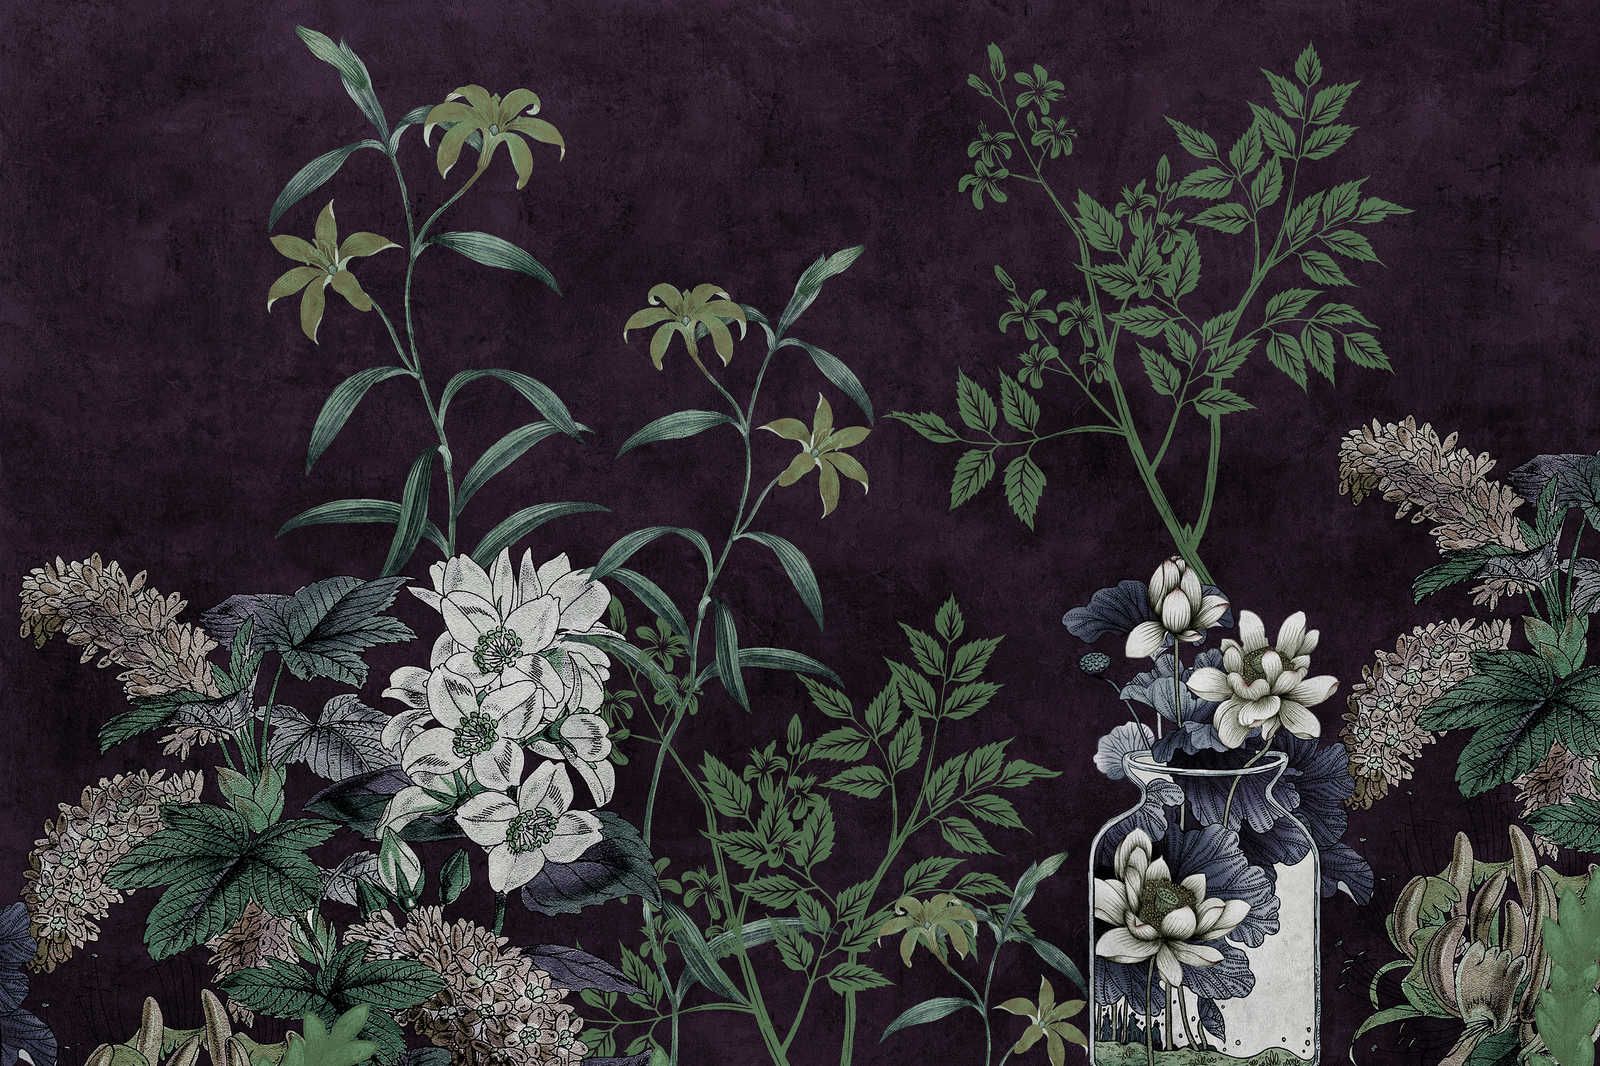             Dark Room 1 - Zwart Canvas Schilderij Botanisch Patroon Groen - 0.90 m x 0.60 m
        